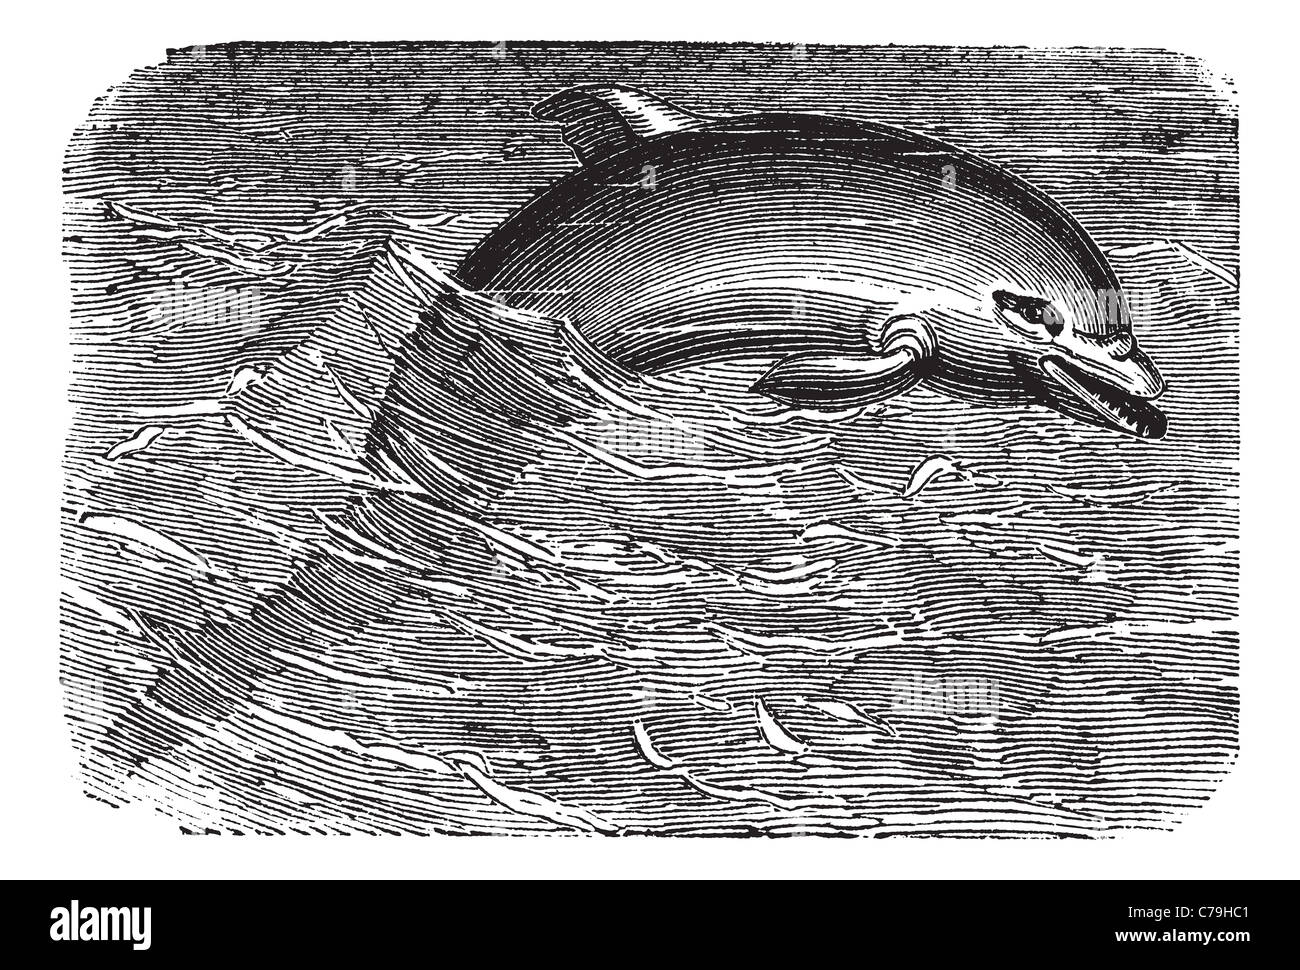 Bottlenose Dolphin or Tursiops truncatus, vintage engraving. Old engraved illustration of a Bottlenose Dolphin. Stock Photo